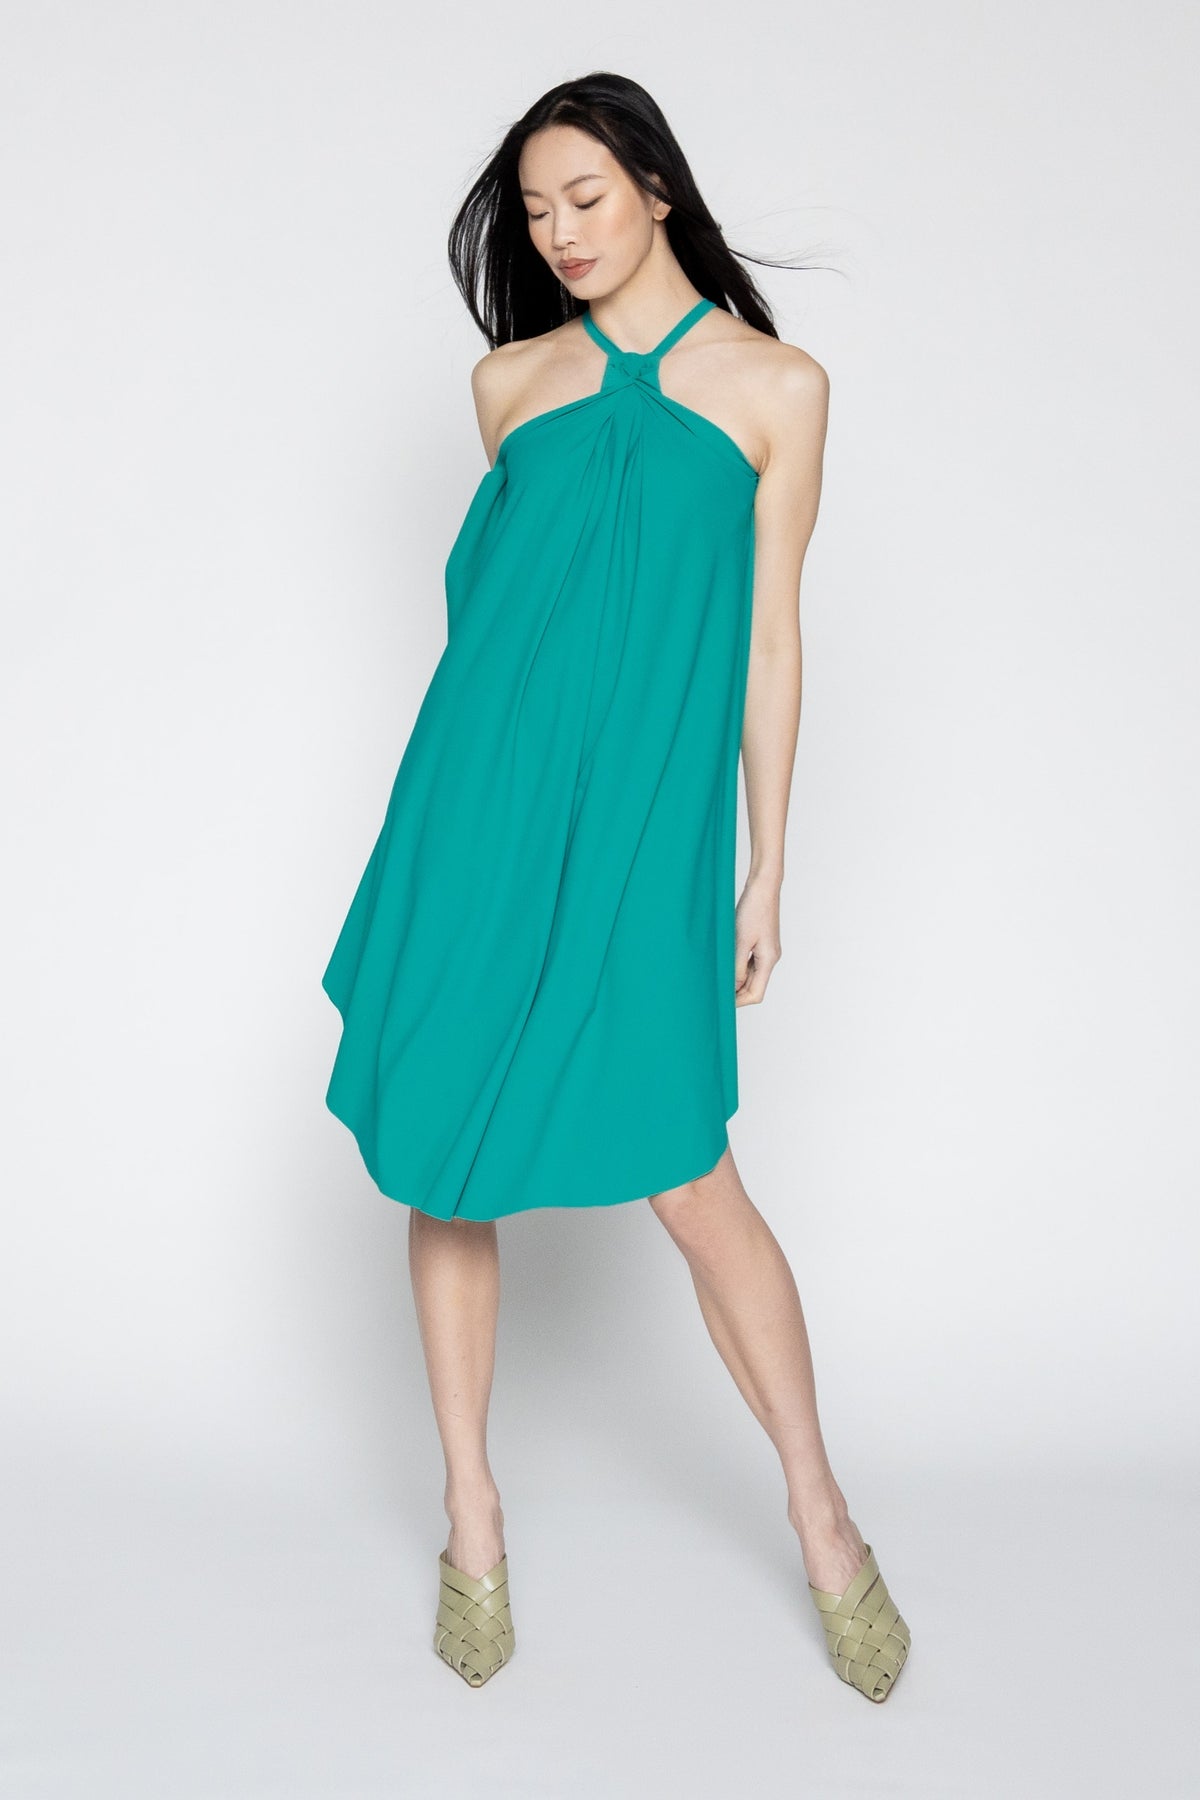 Rita Dress - Turquoise